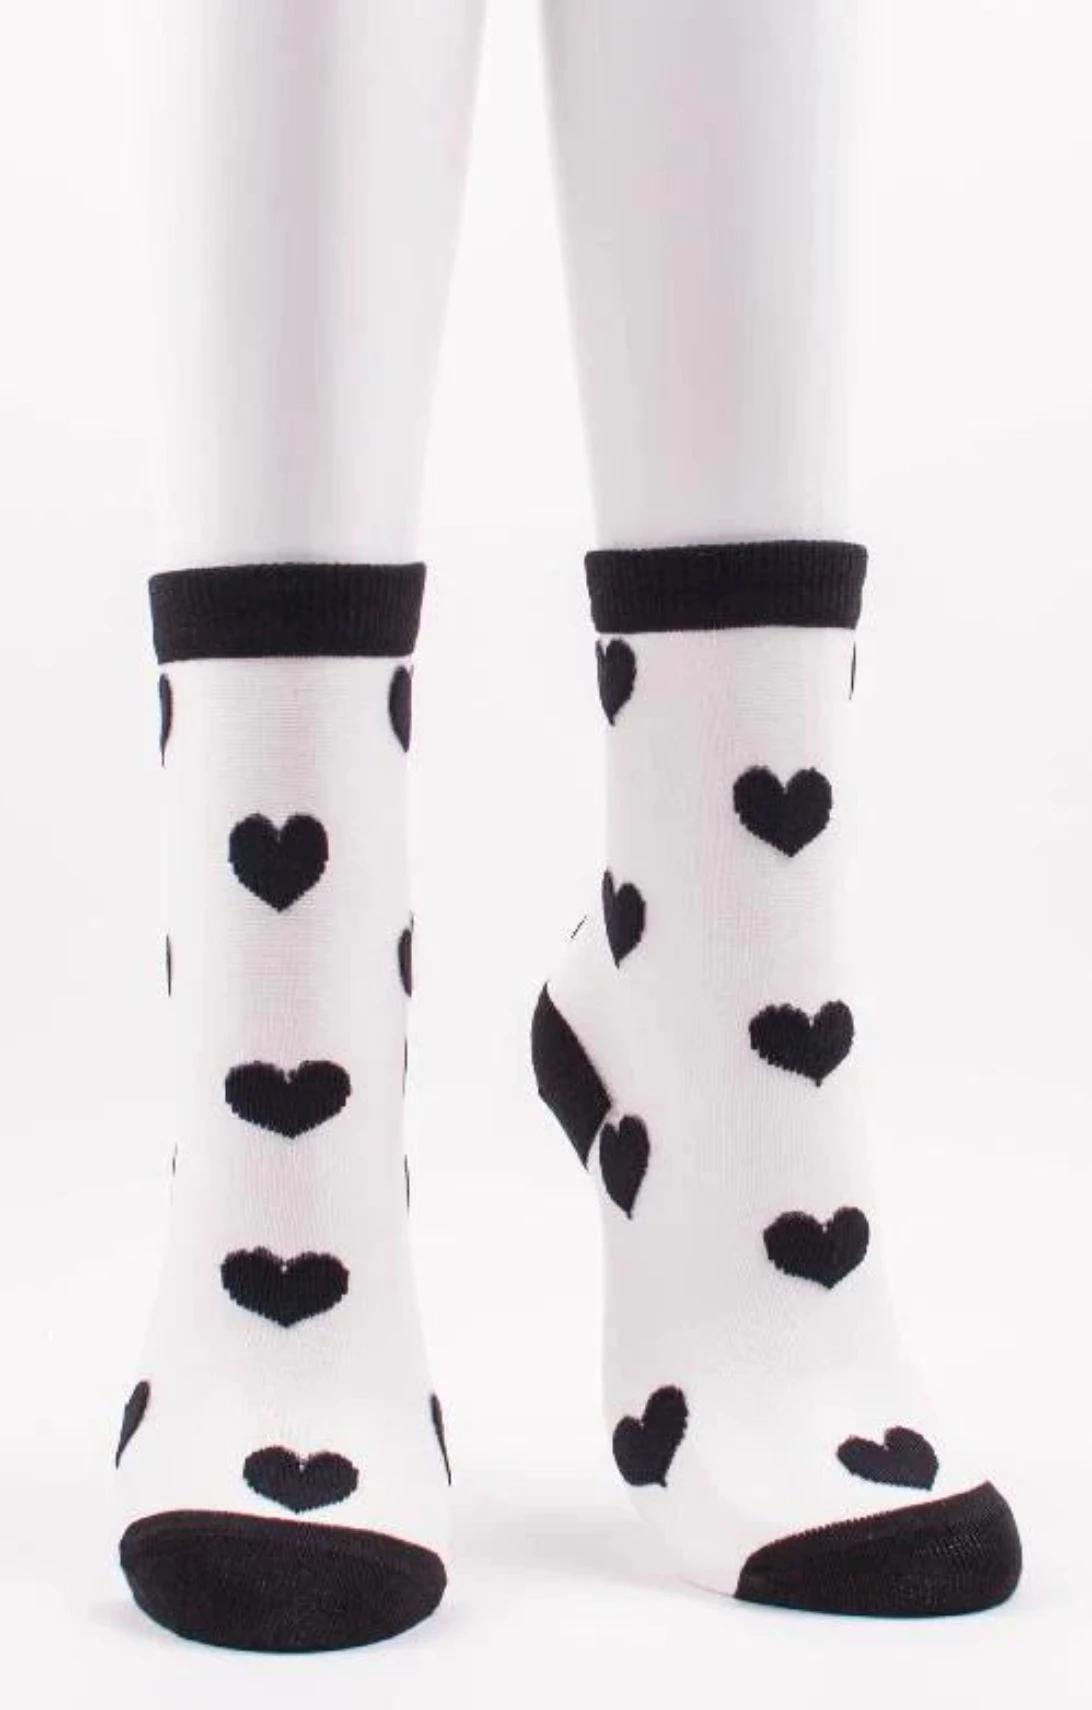 6 Pairs Sheer Socks Transparent See Through Ankle Socks Cute Heart Summeer  Thin Mesh Lace Socks for Women Fashion(Black, White)